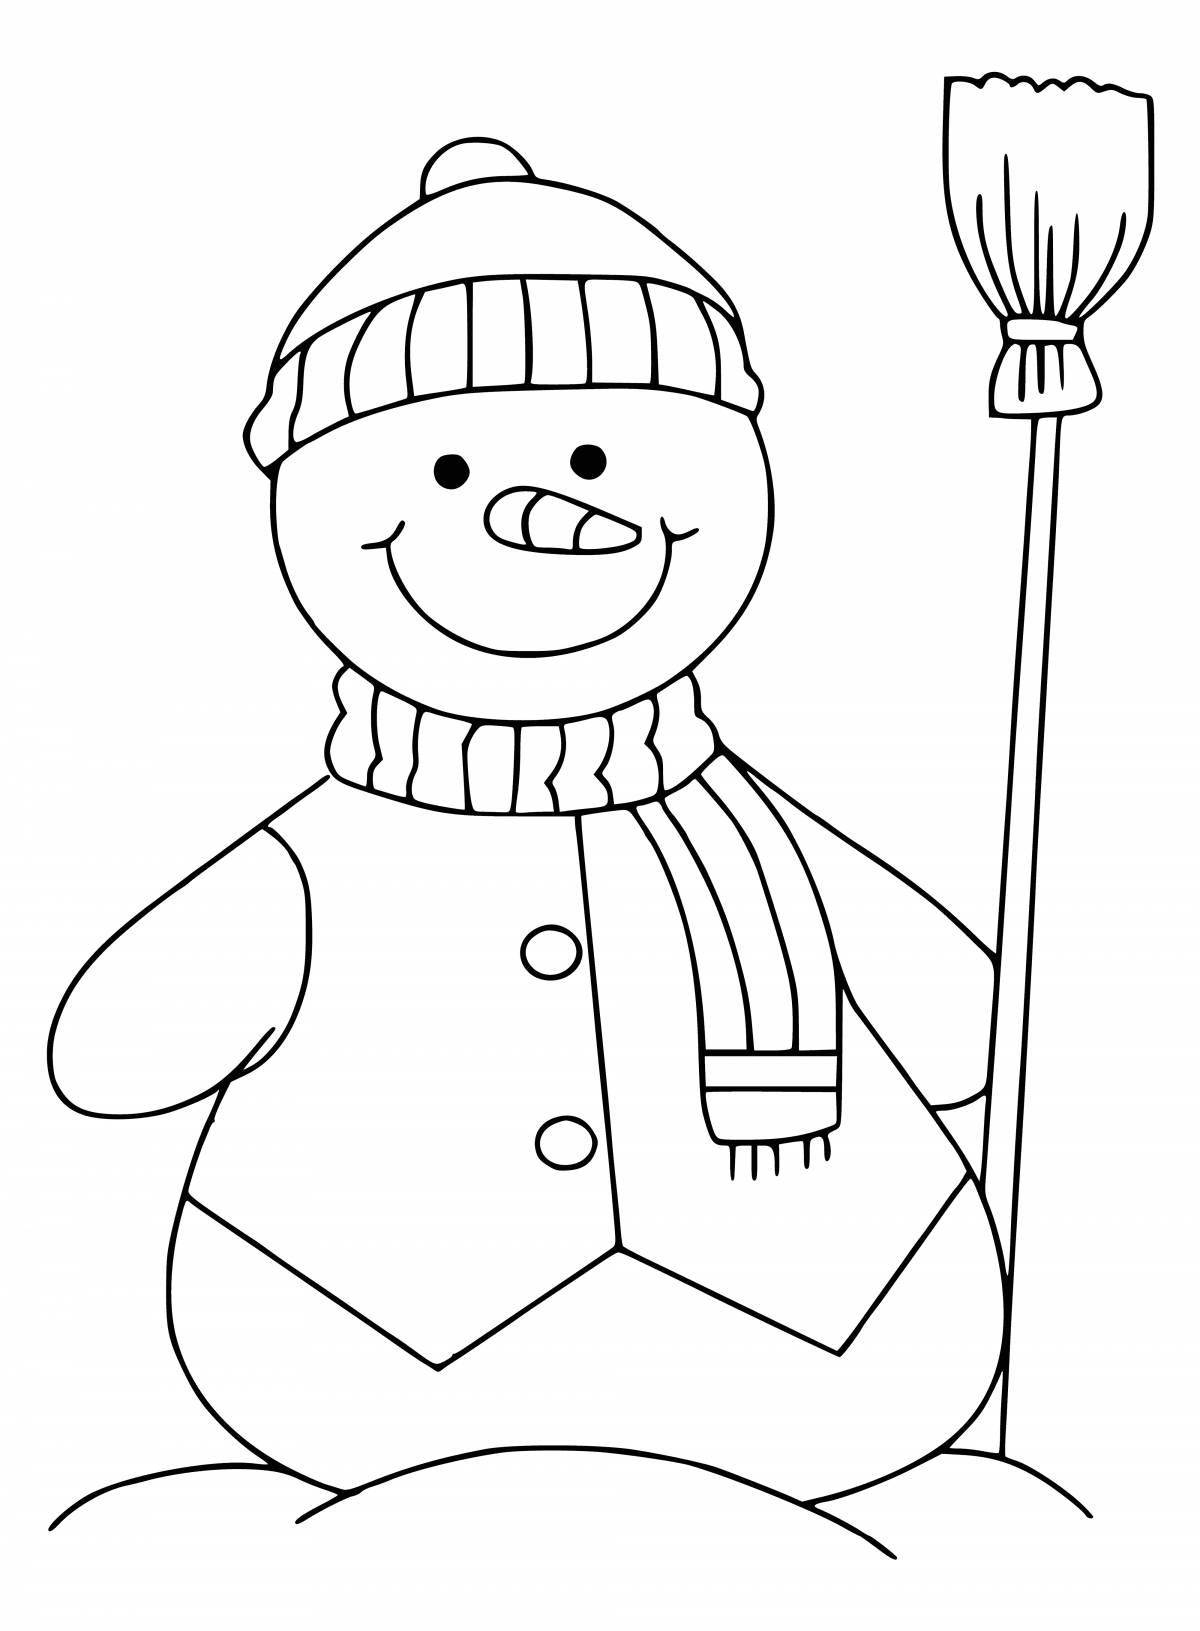 Snowman#11